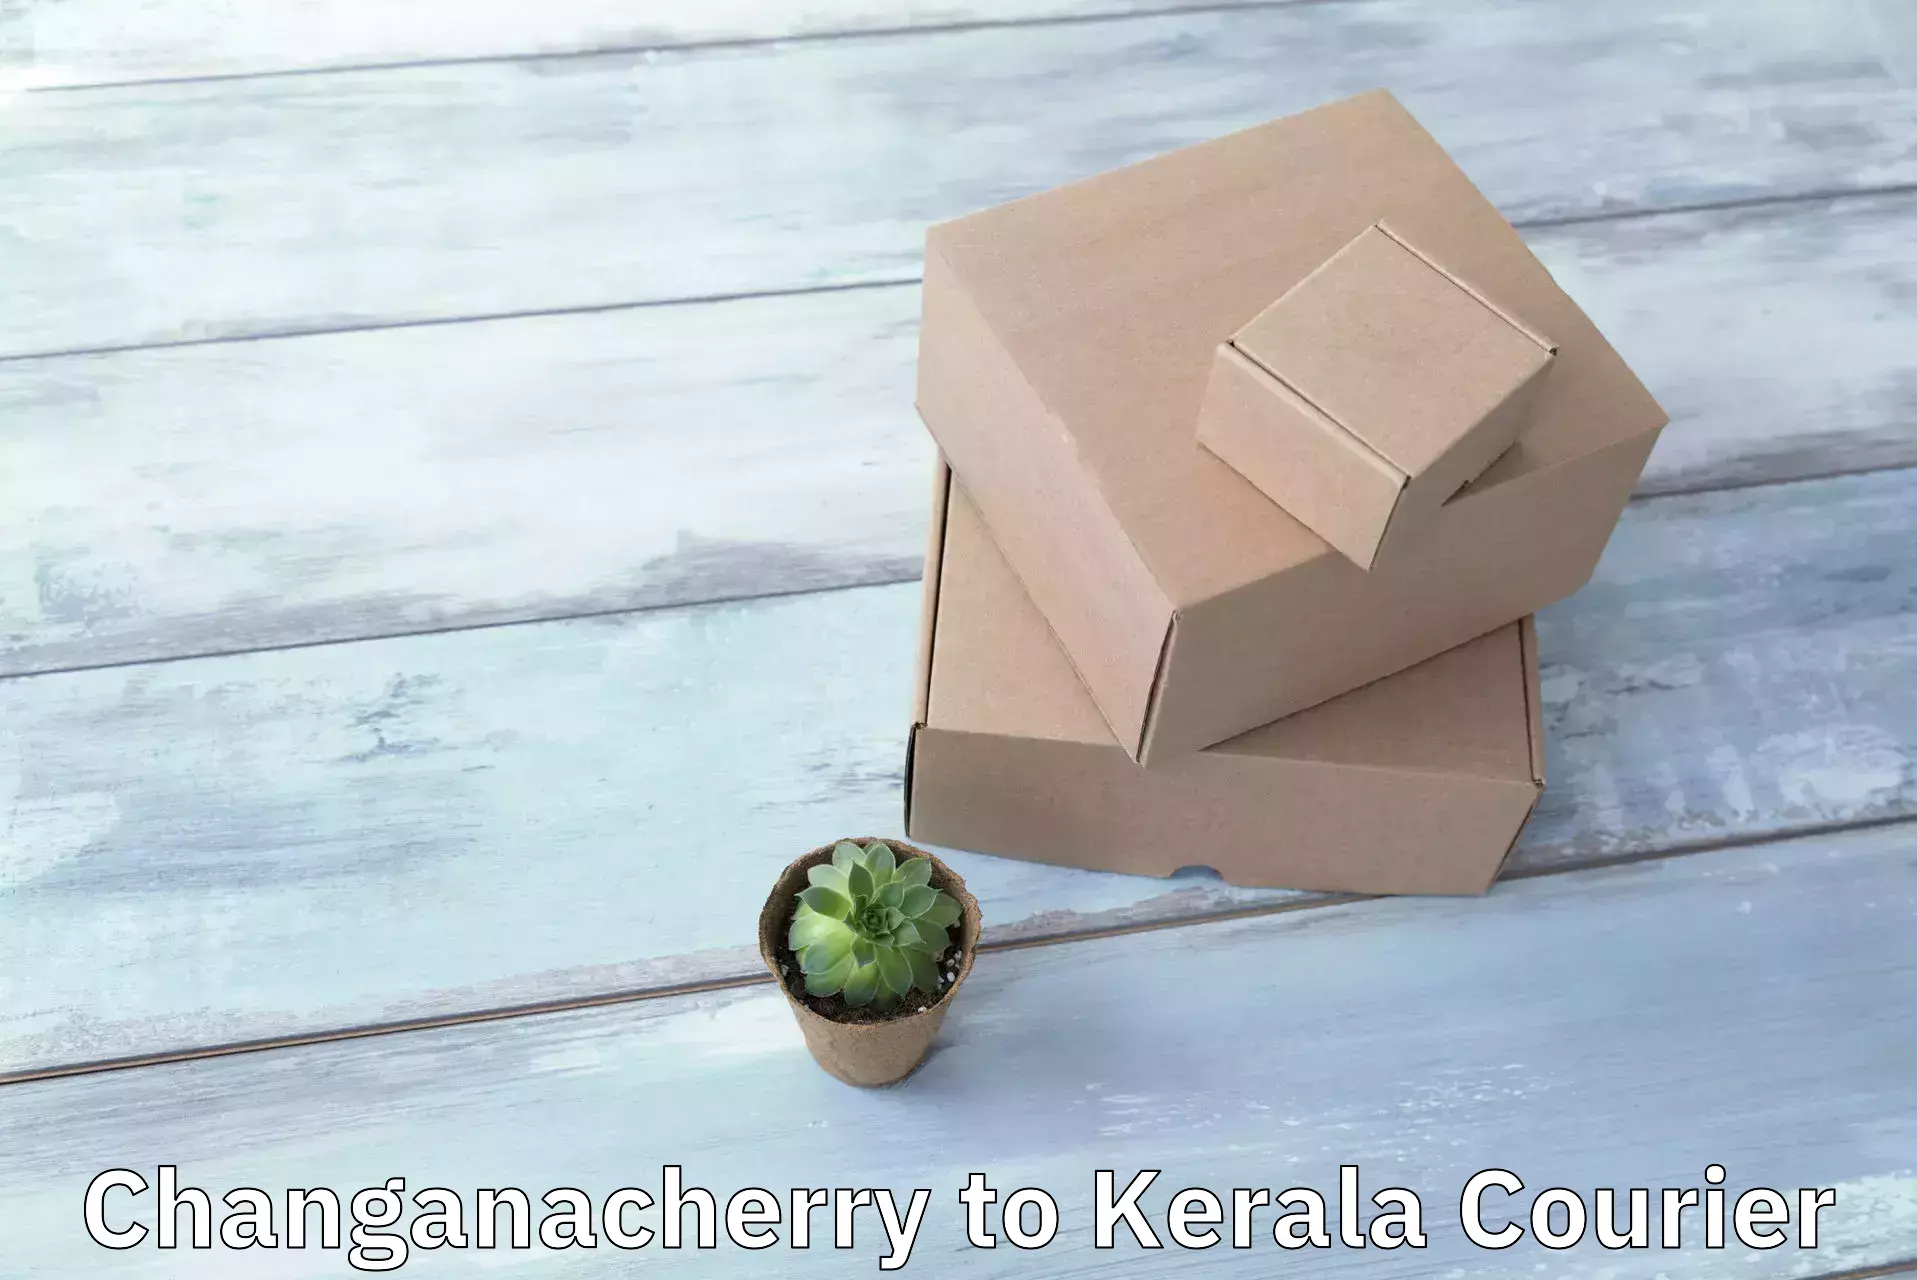 Cash on delivery service Changanacherry to Cochin Port Kochi